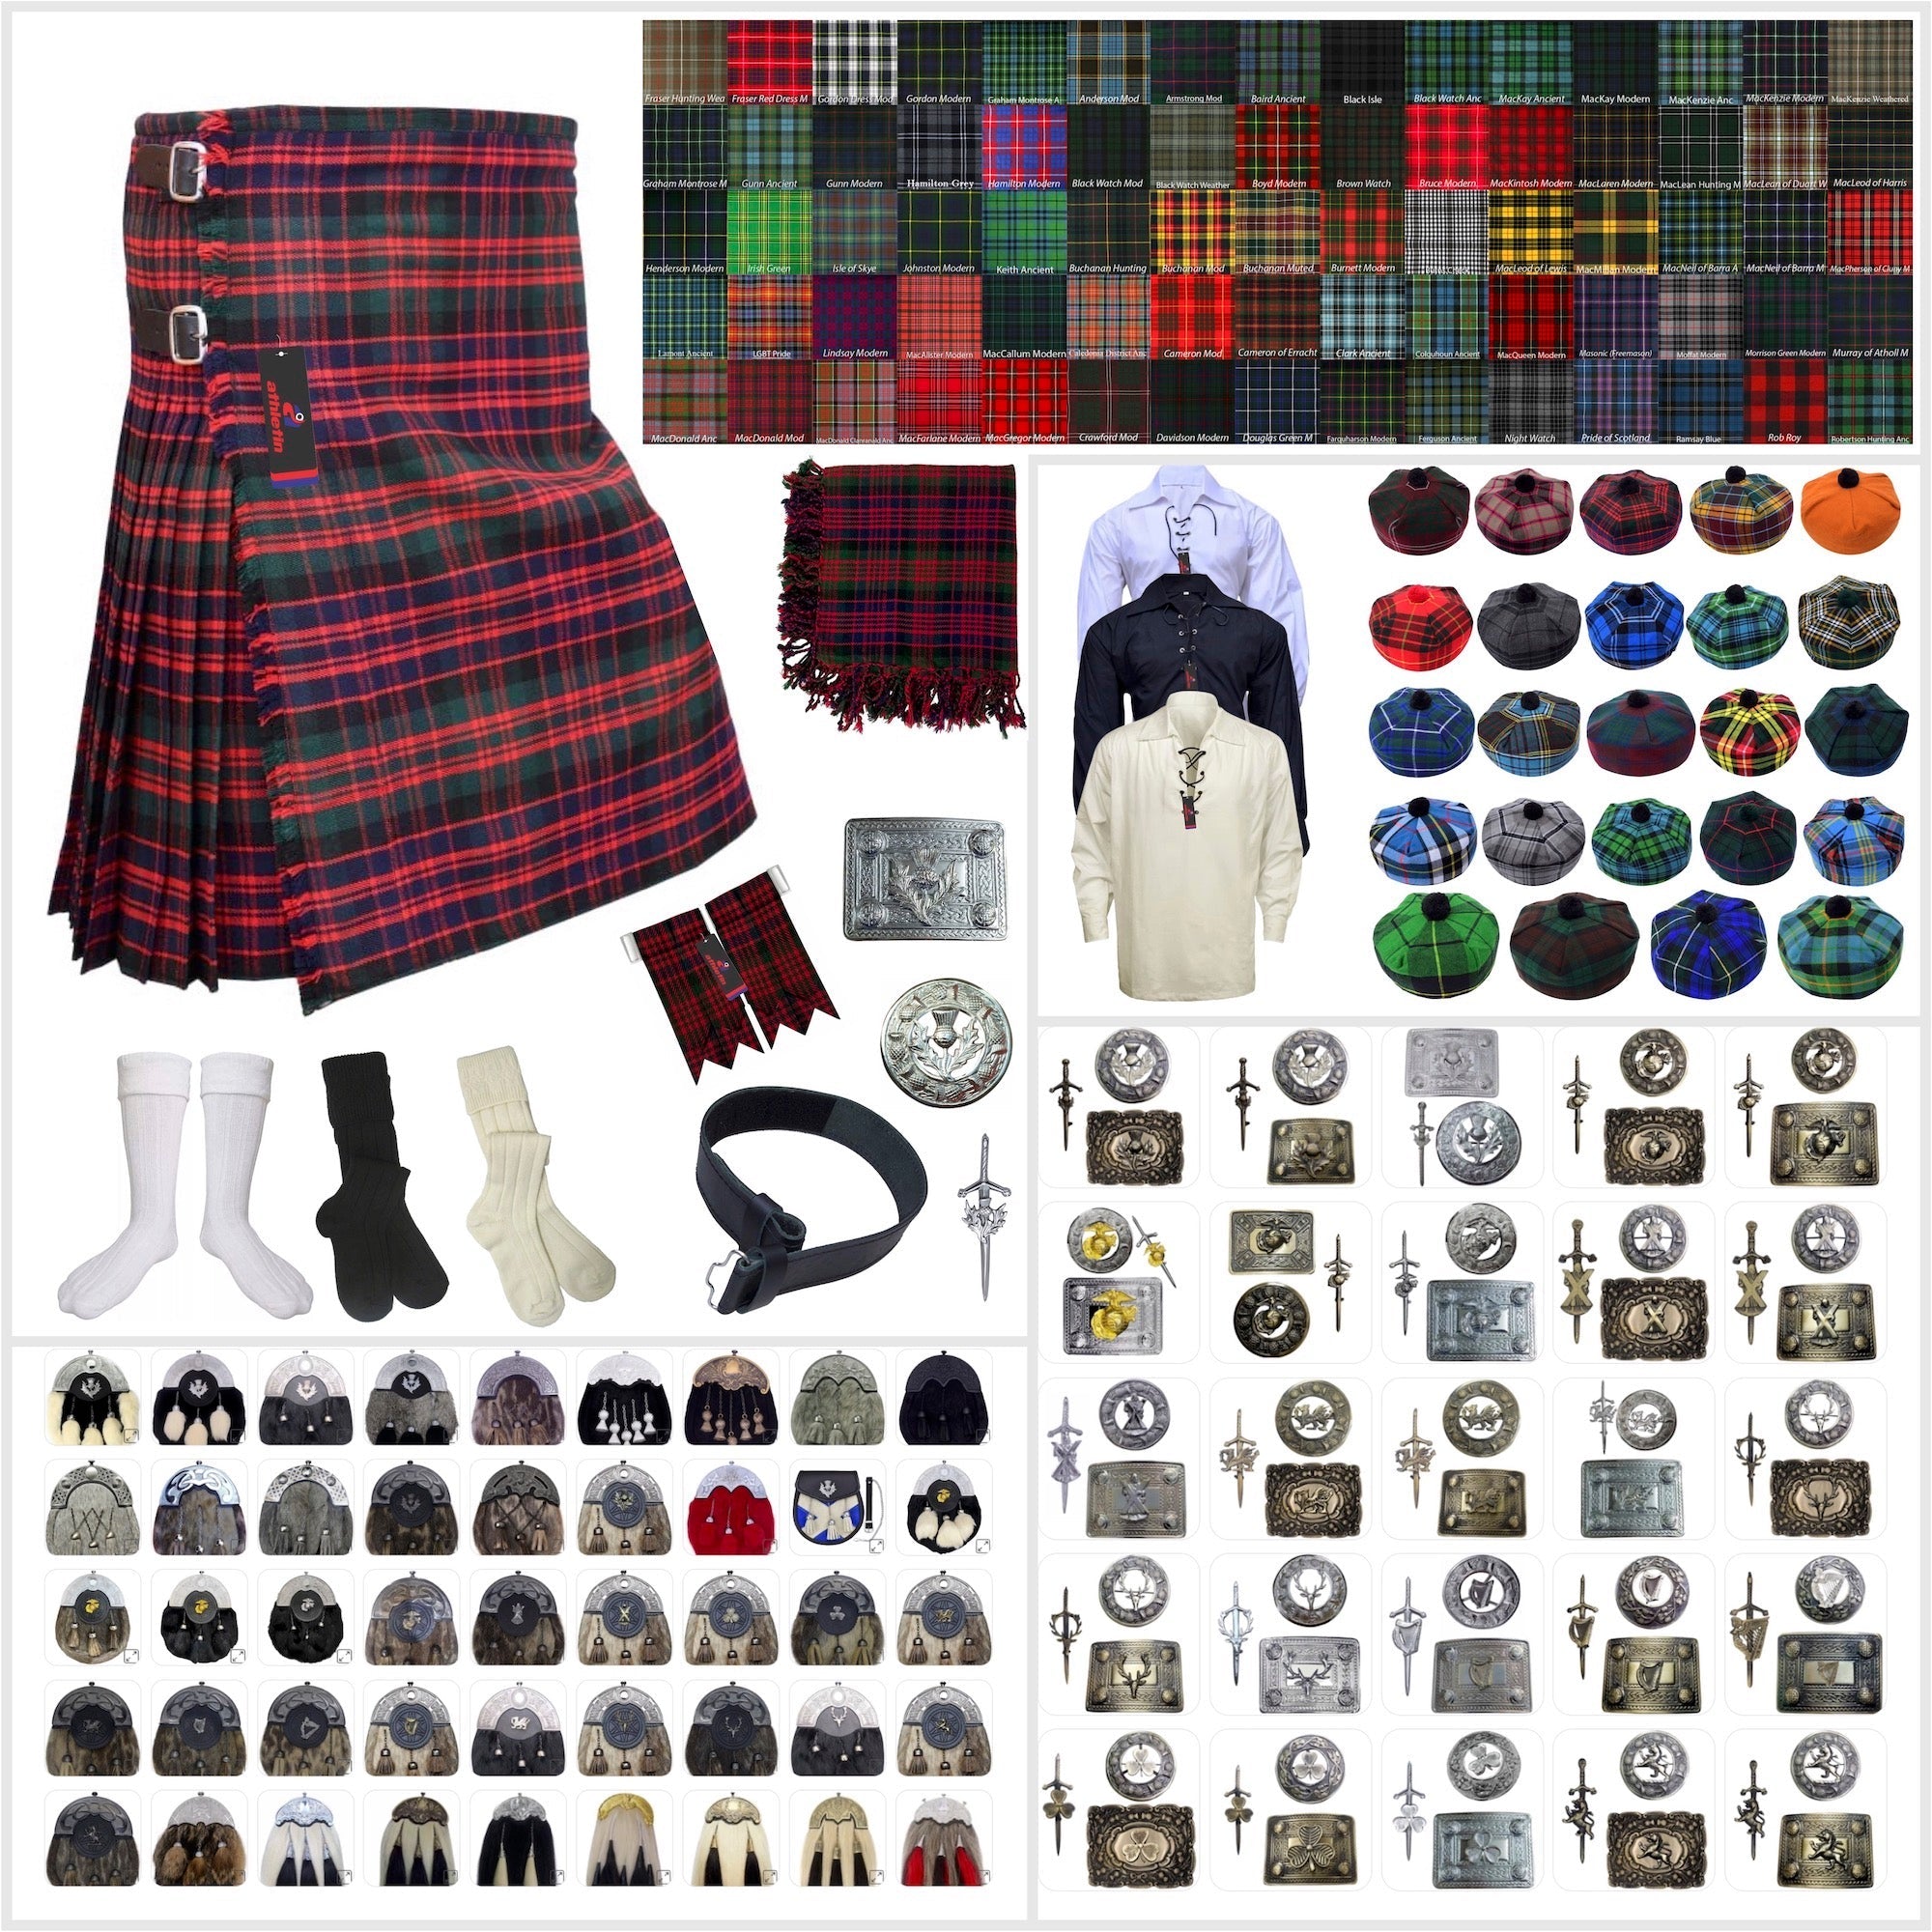 Classic Macdonald Tartan Kilt Outfit - Authentic Scottish Heritage Wear